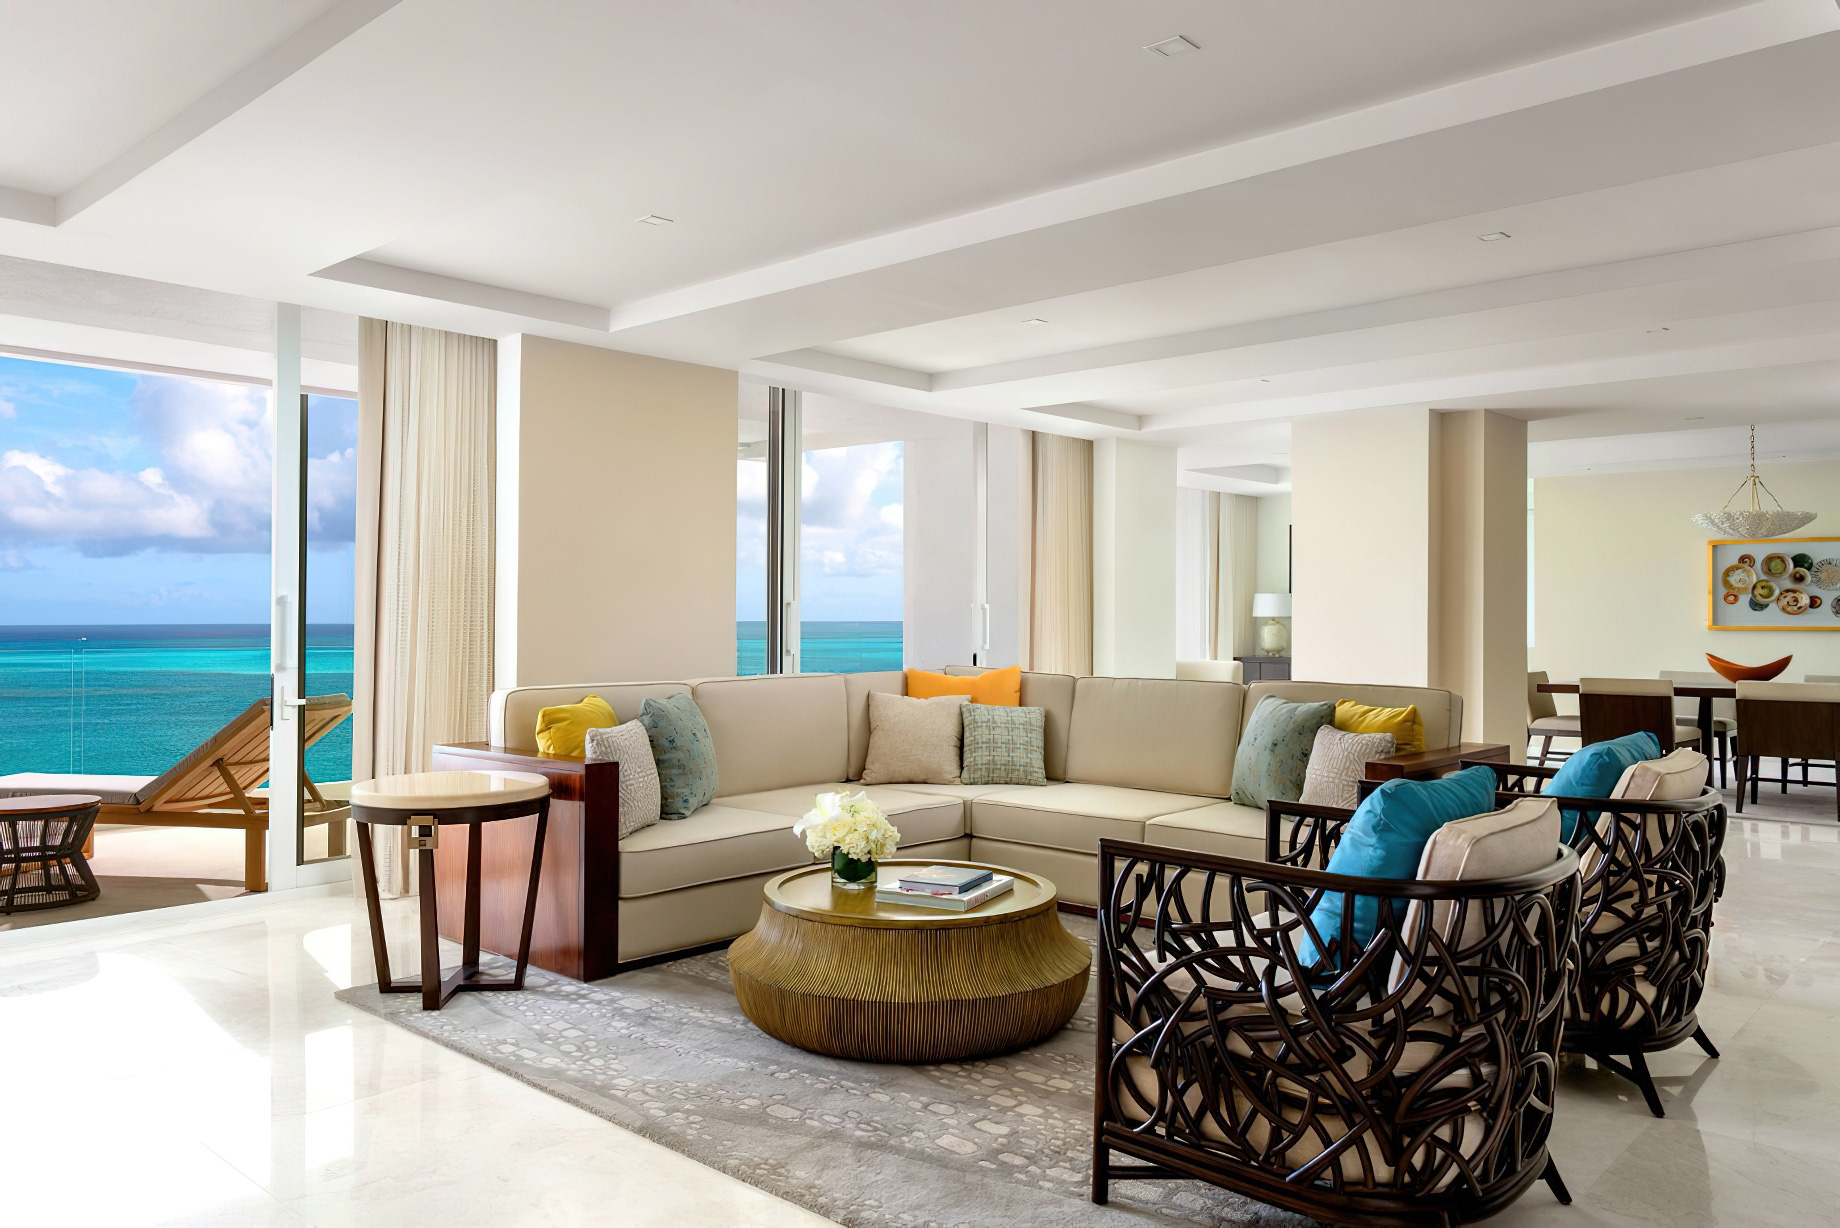 The Ritz-Carlton, Turks & Caicos Resort – Providenciales, Turks and Caicos Islands – Ritz-Carlton Suite Living Room